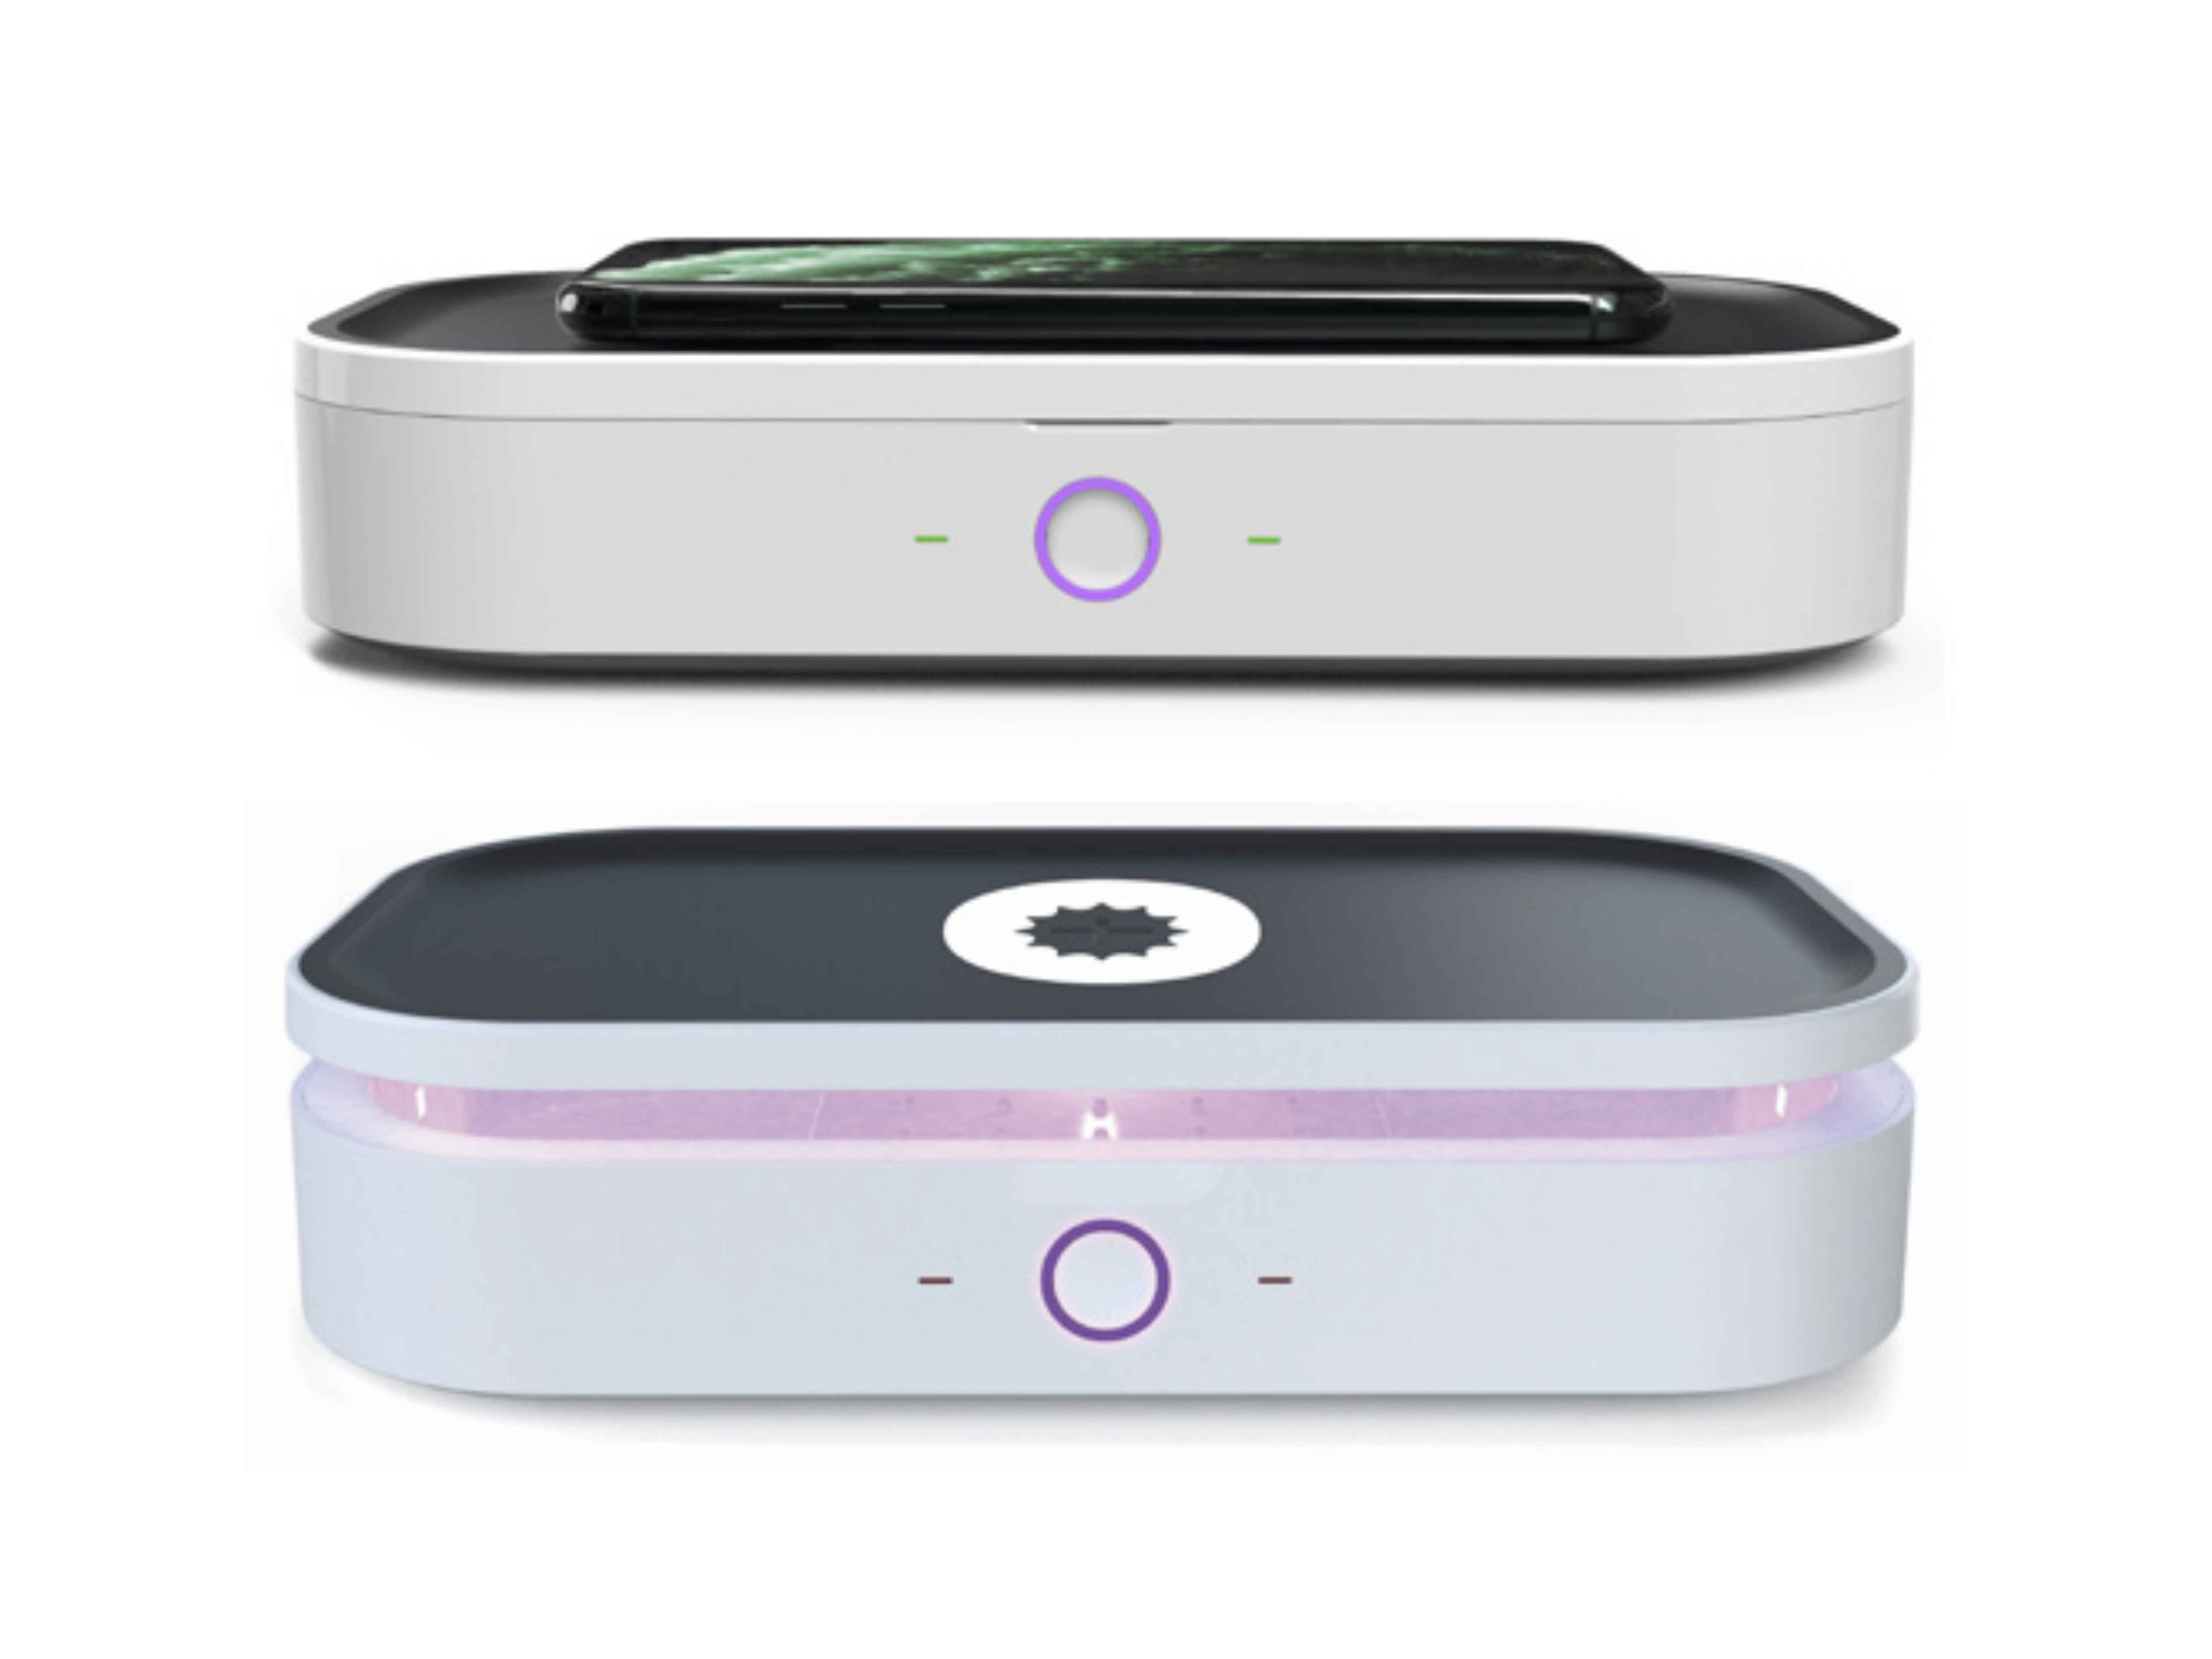    gako UV-C Disinfection Box inkl. Qi Wireless Charger